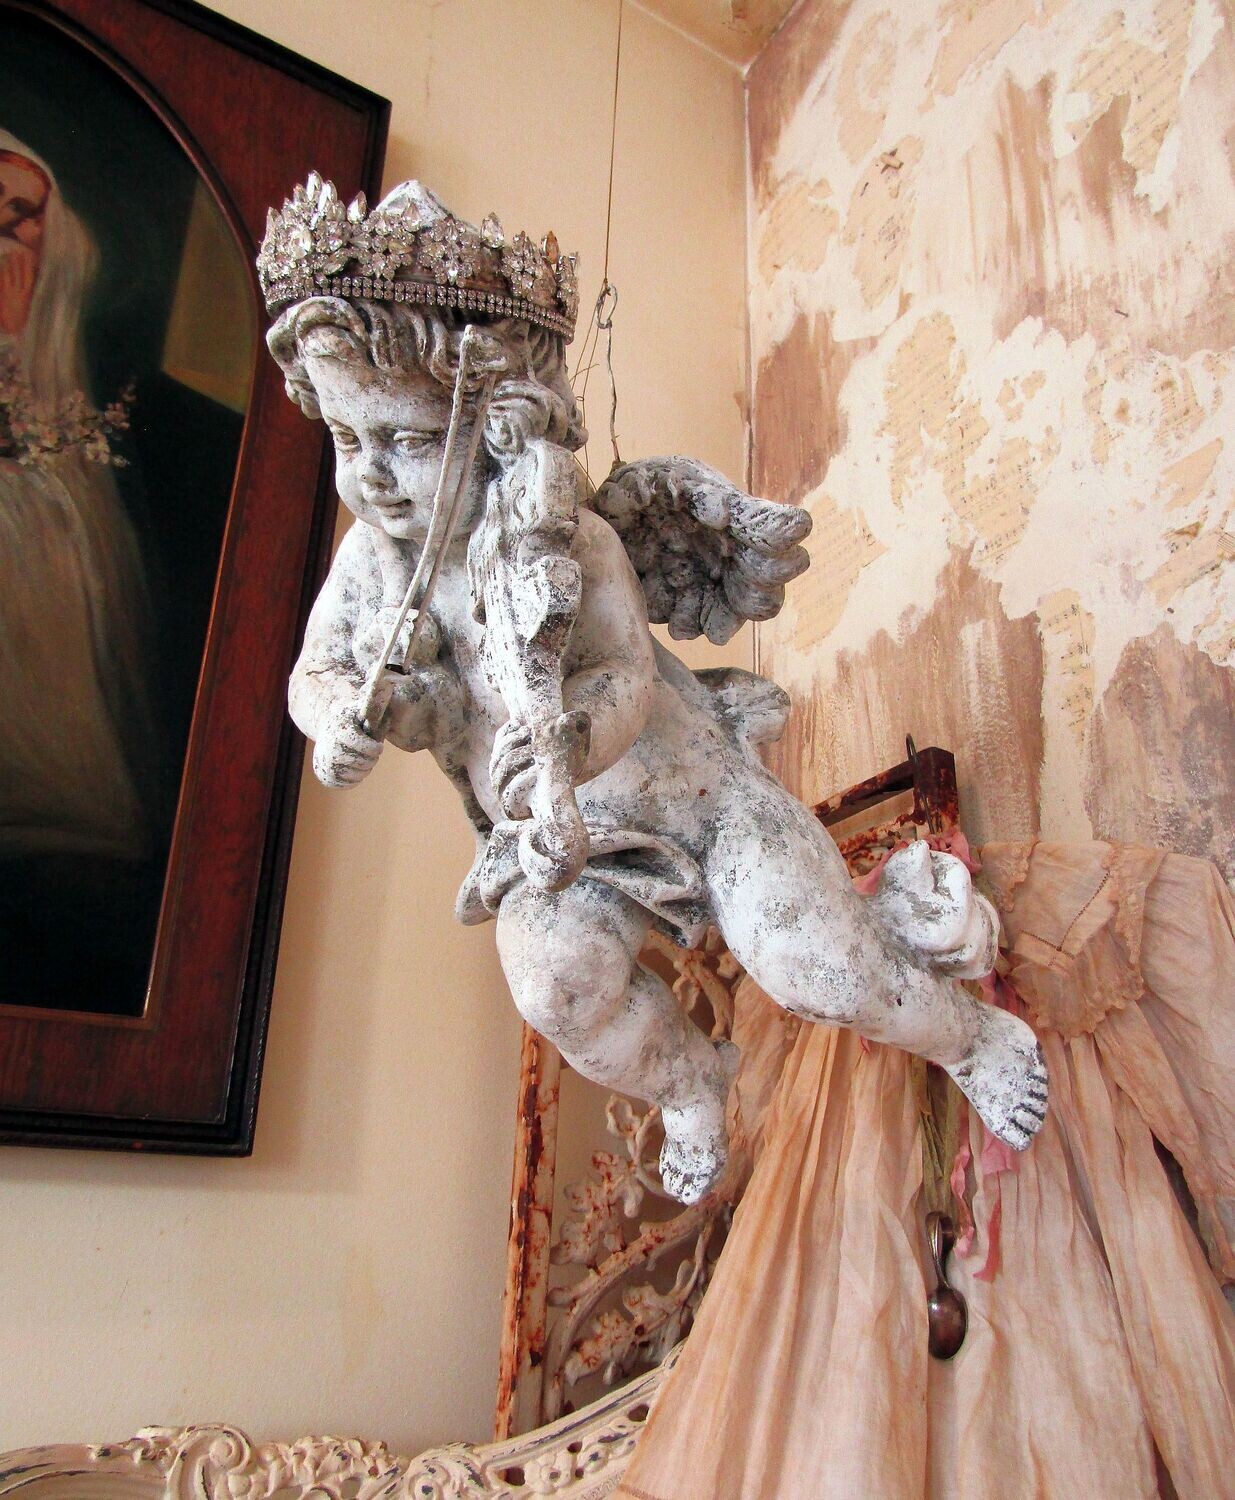 SOLD   Large carved wood flying cherub sculpture, Italian, Spanish or Italian antique rhinestone crown